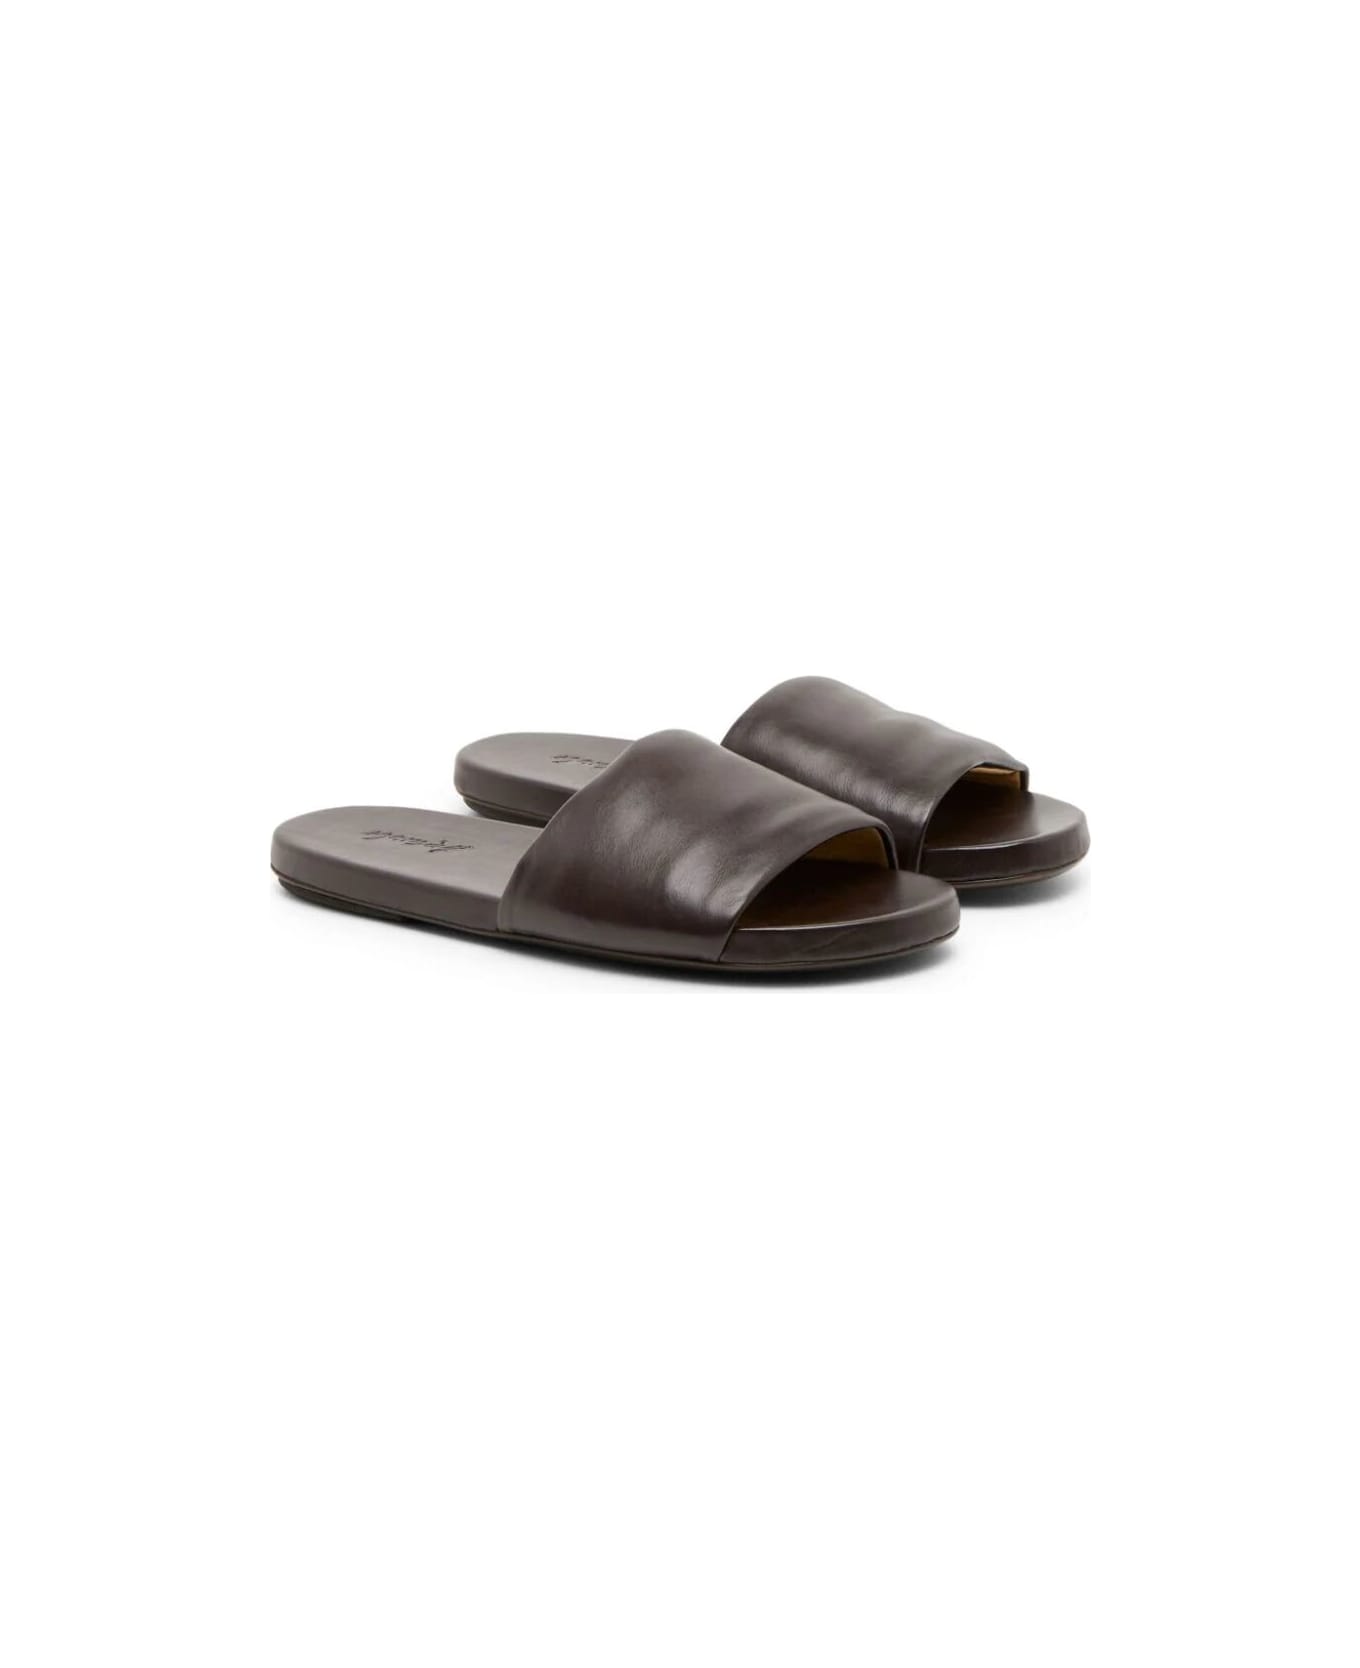 Marsell Spanciata Sandals - Brown